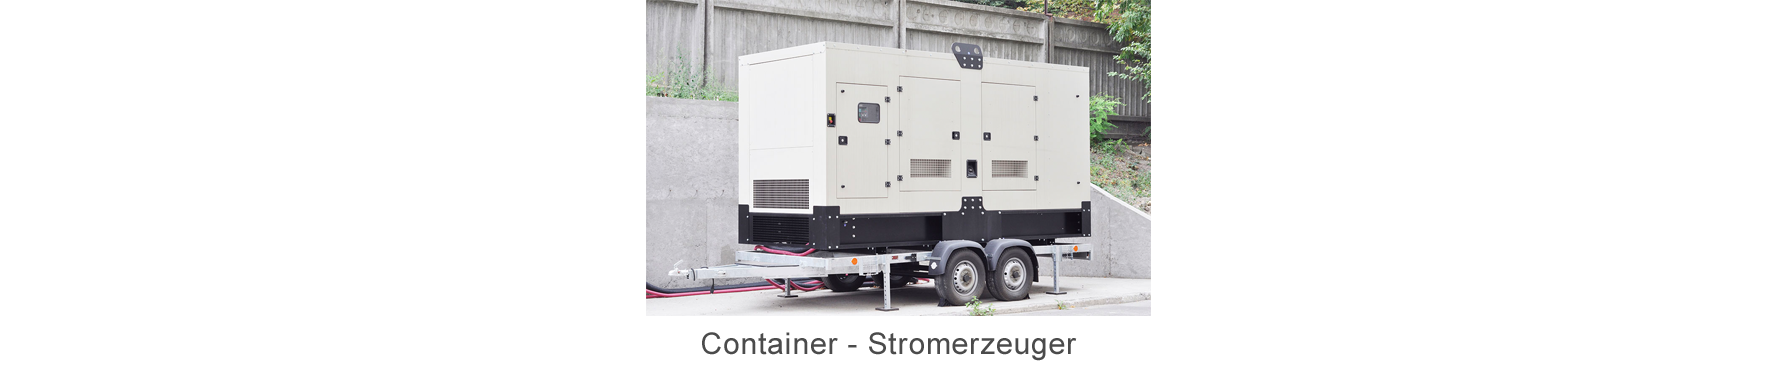 Containter-Stromerzeuger_1780x362.png